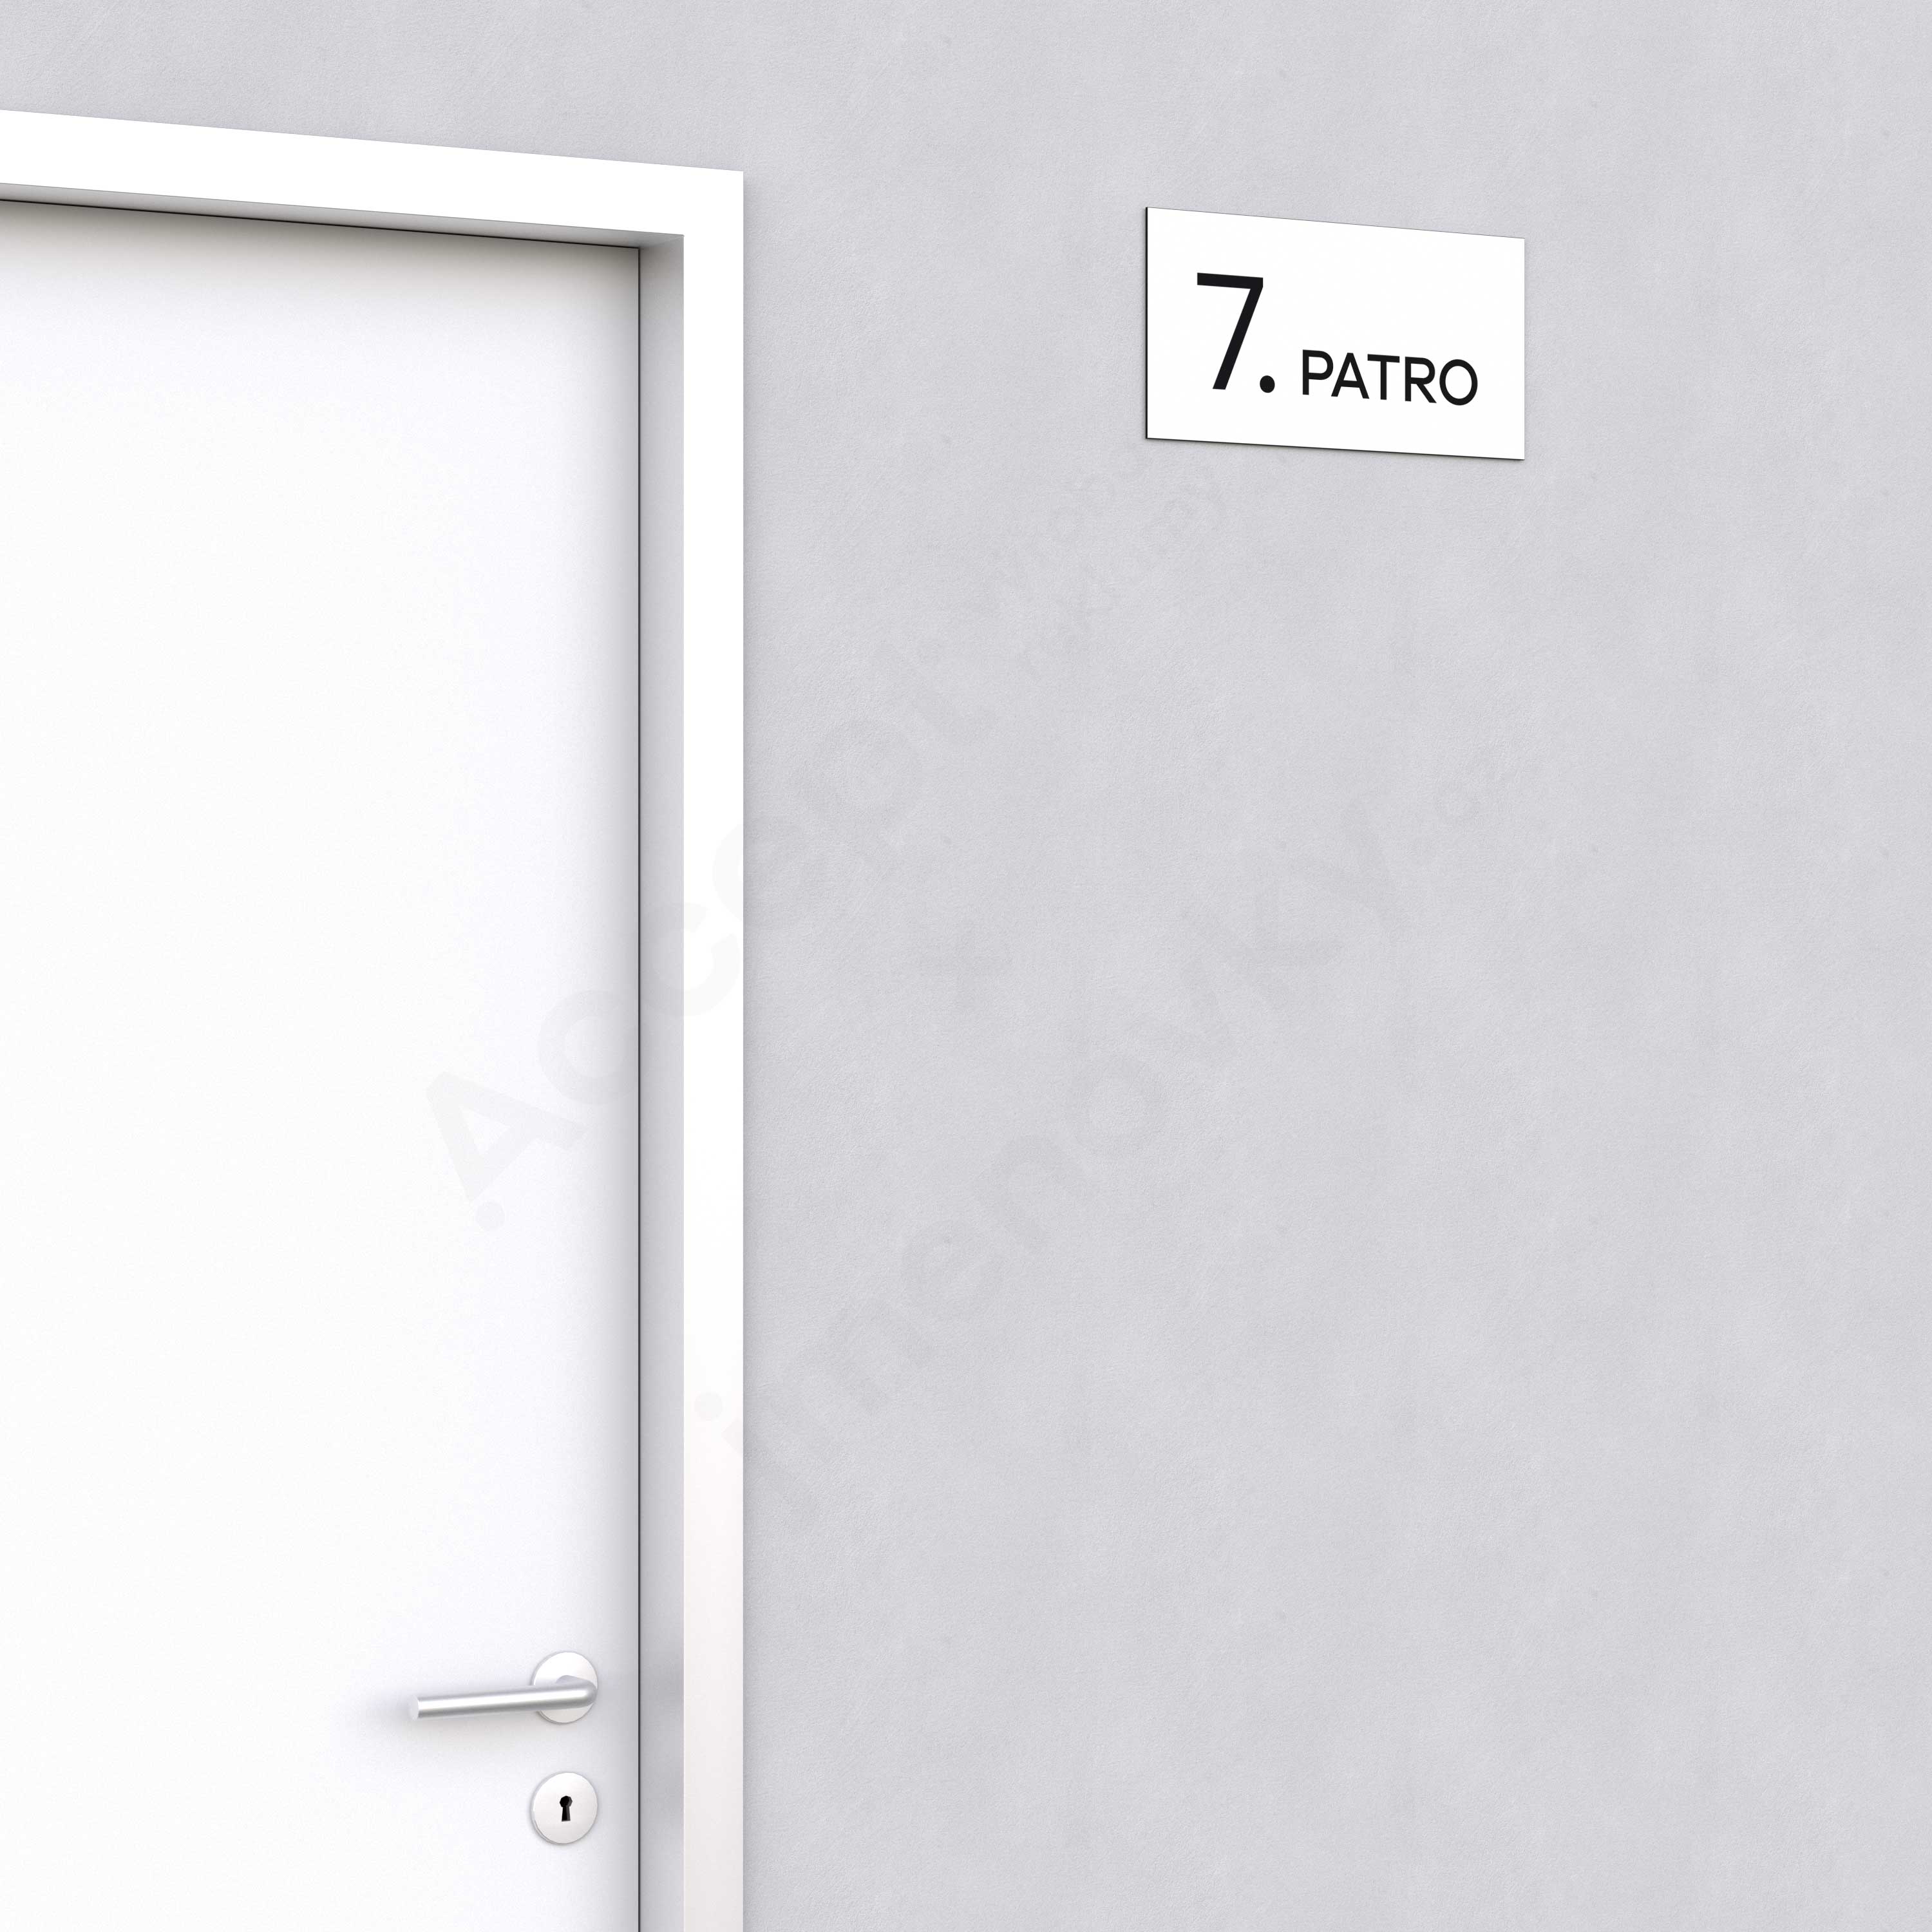 Označení podlaží "7. PATRO" - bílá tabulka - černý popis - náhled